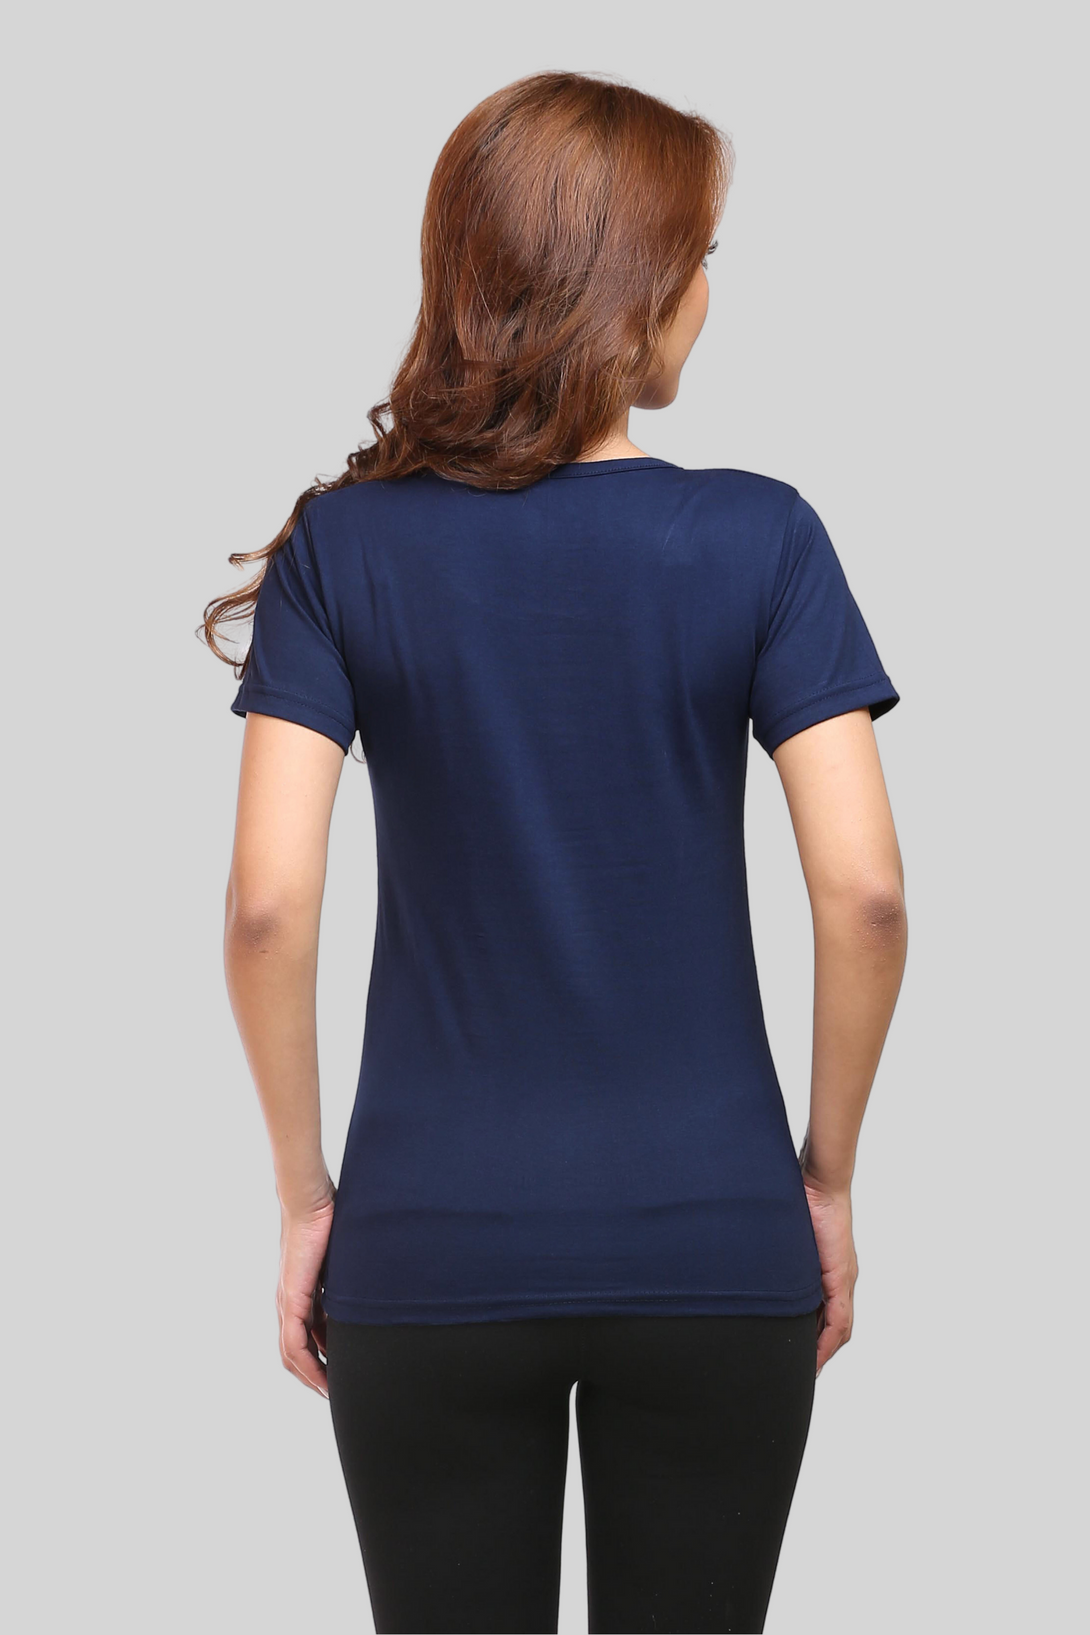 Navy Blue Scoop Neck T-Shirt For Women - WowWaves - 5